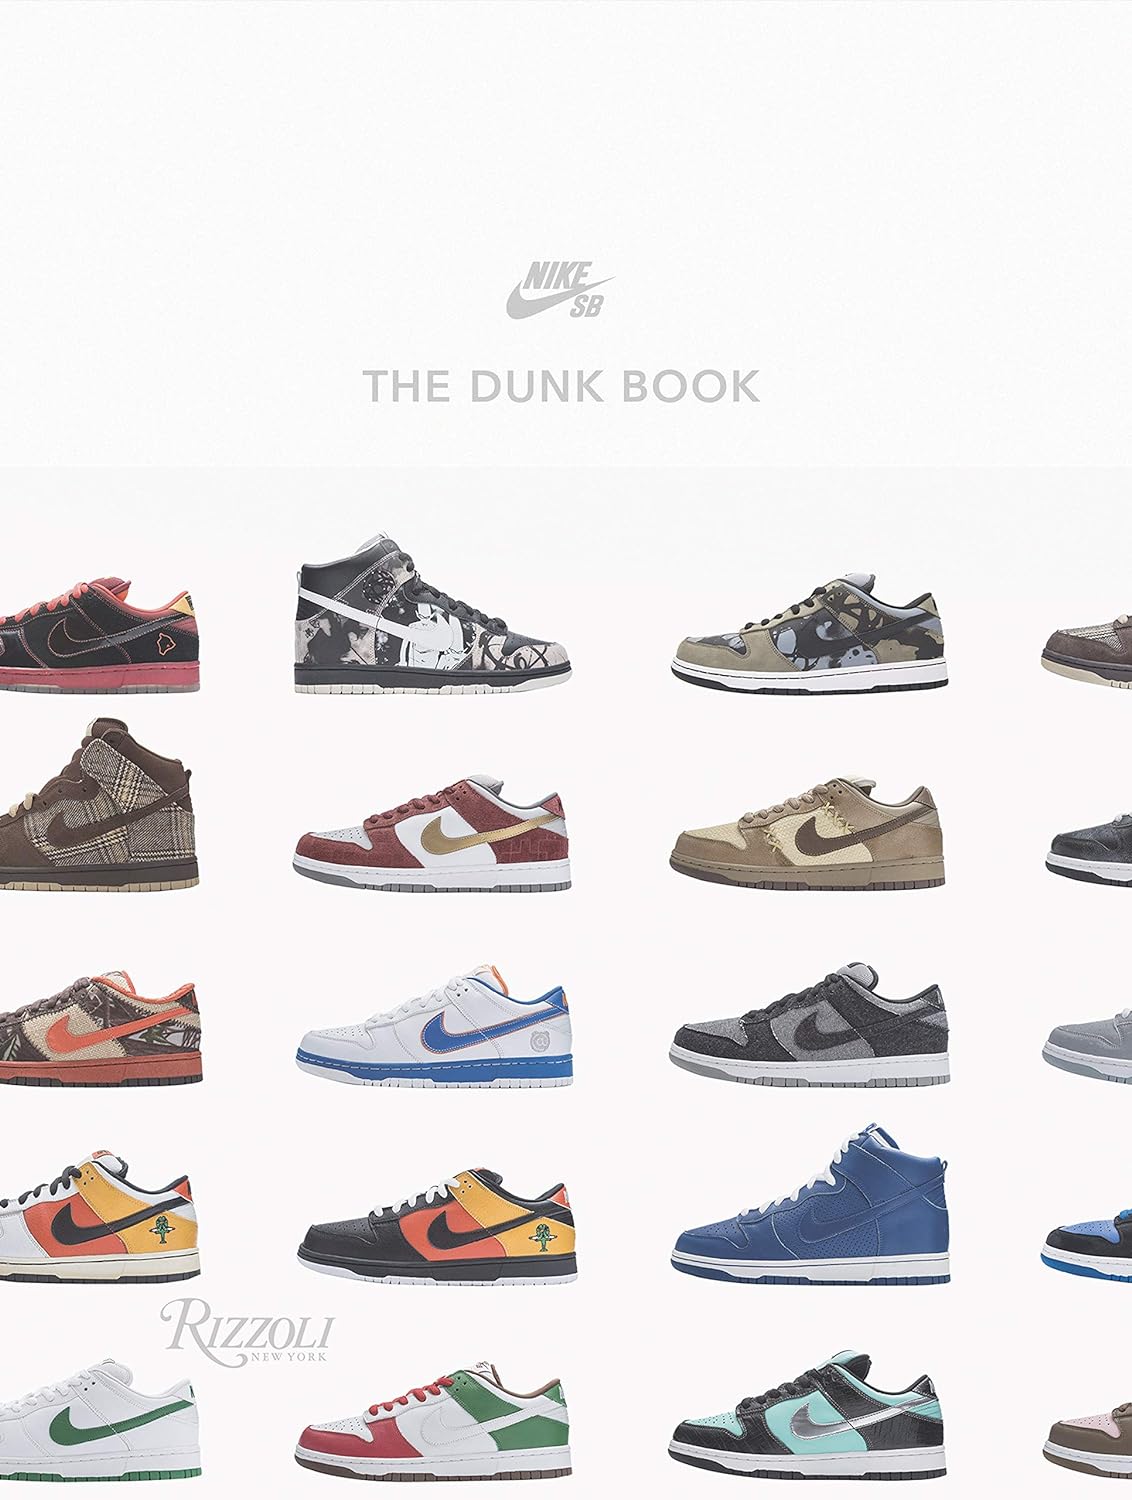 Nike Sb: The Dunk Book Pasta dura